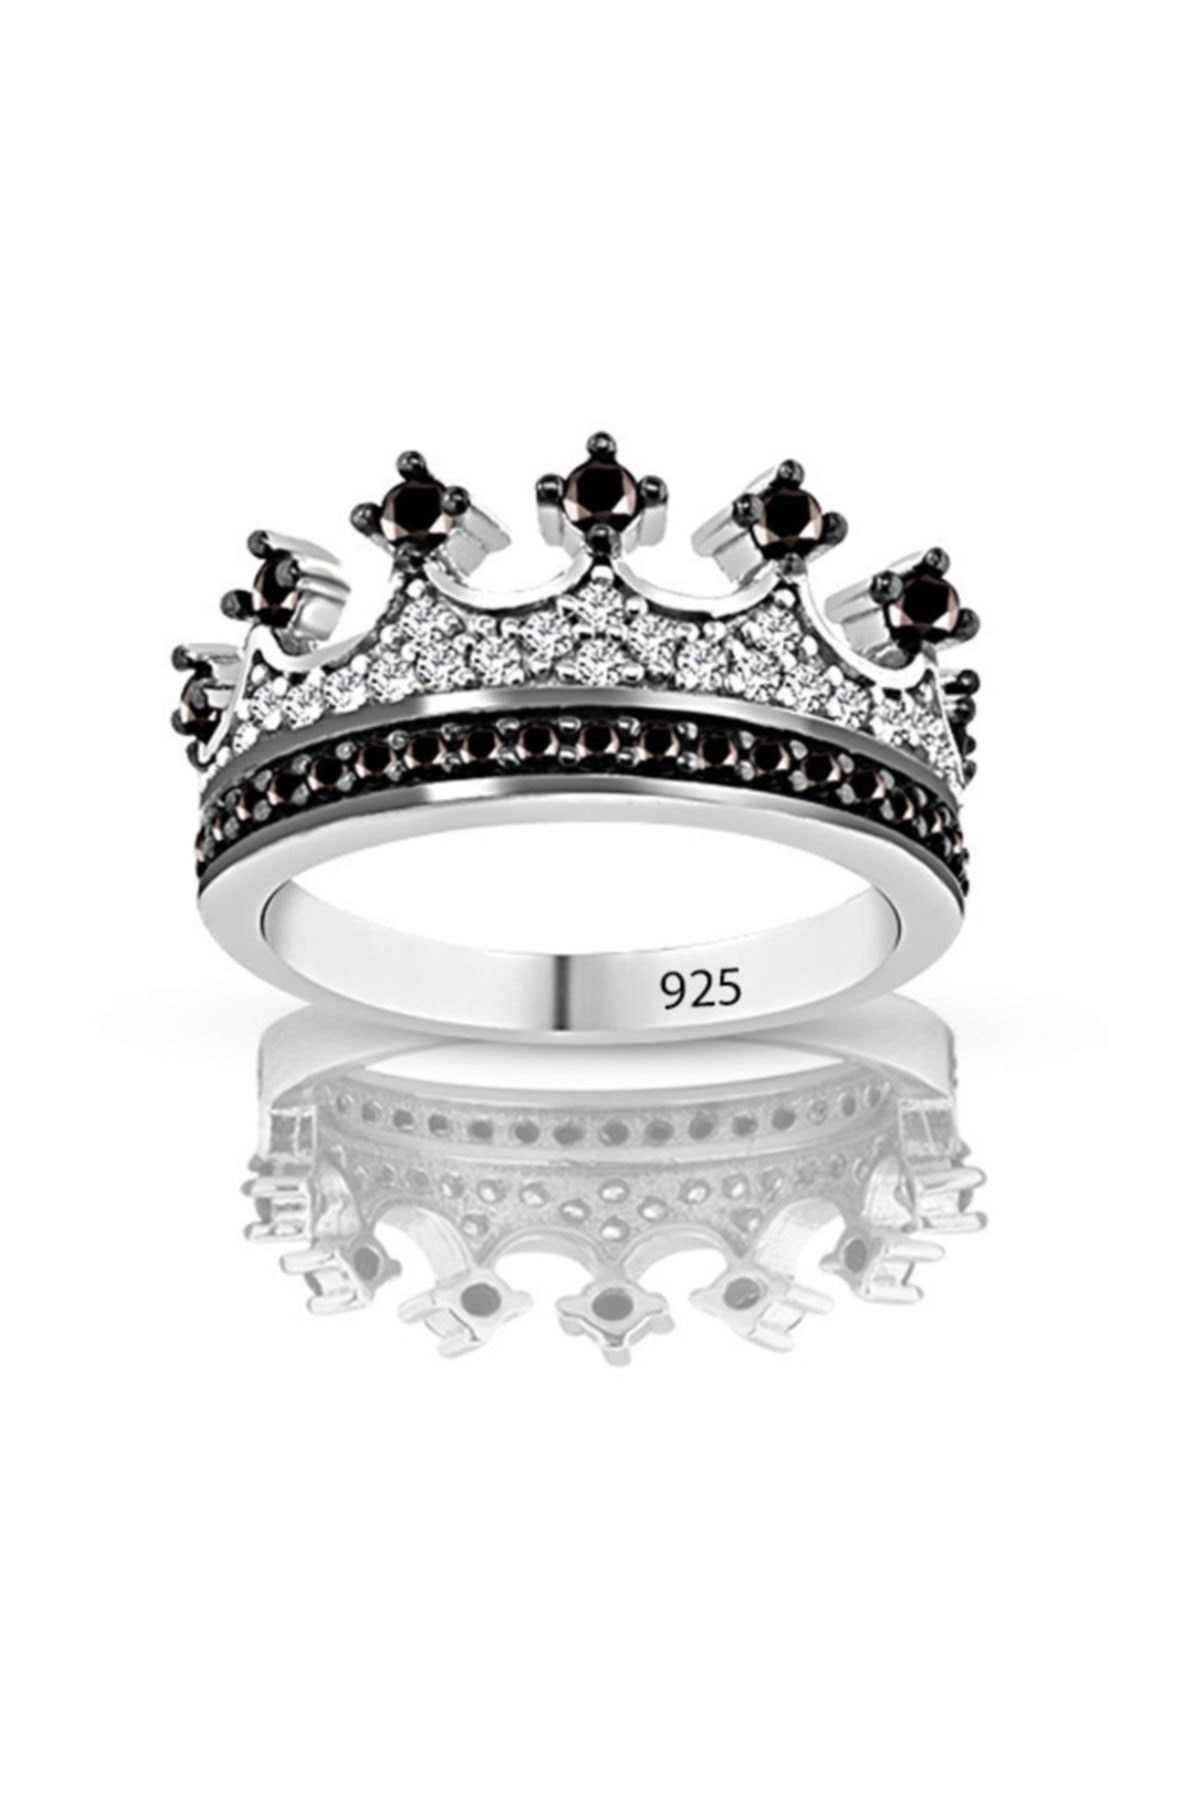 Silver crown ring crown ringqueen ringblack crown | Etsy